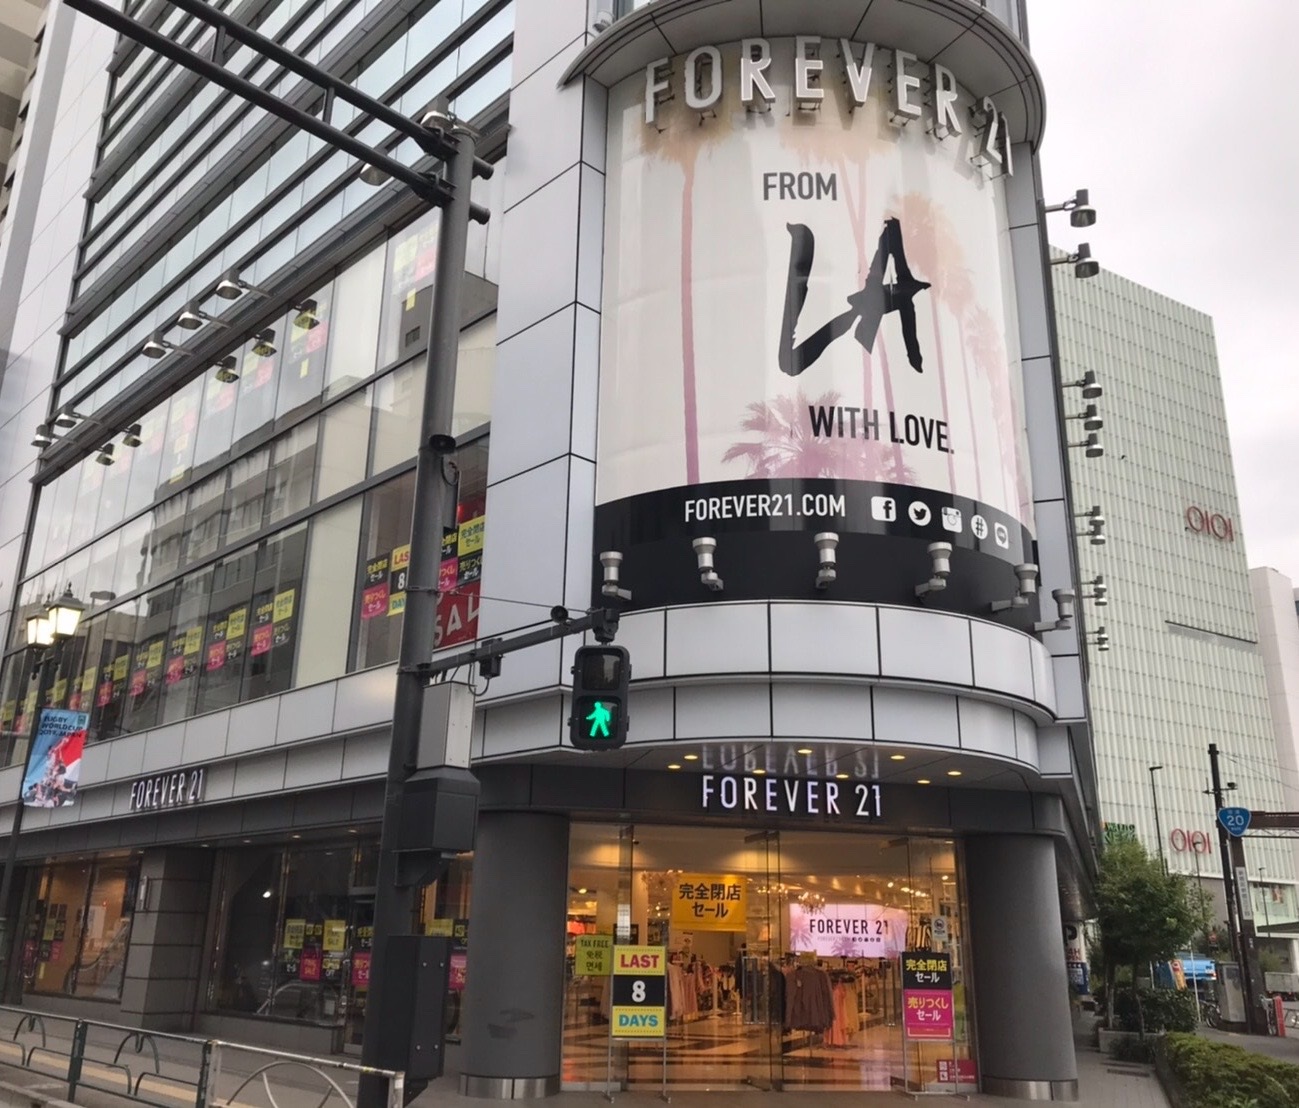 Forever21 ファイナルセール残りあと1週間 合同会社forever21 Japan Retailのプレスリリース